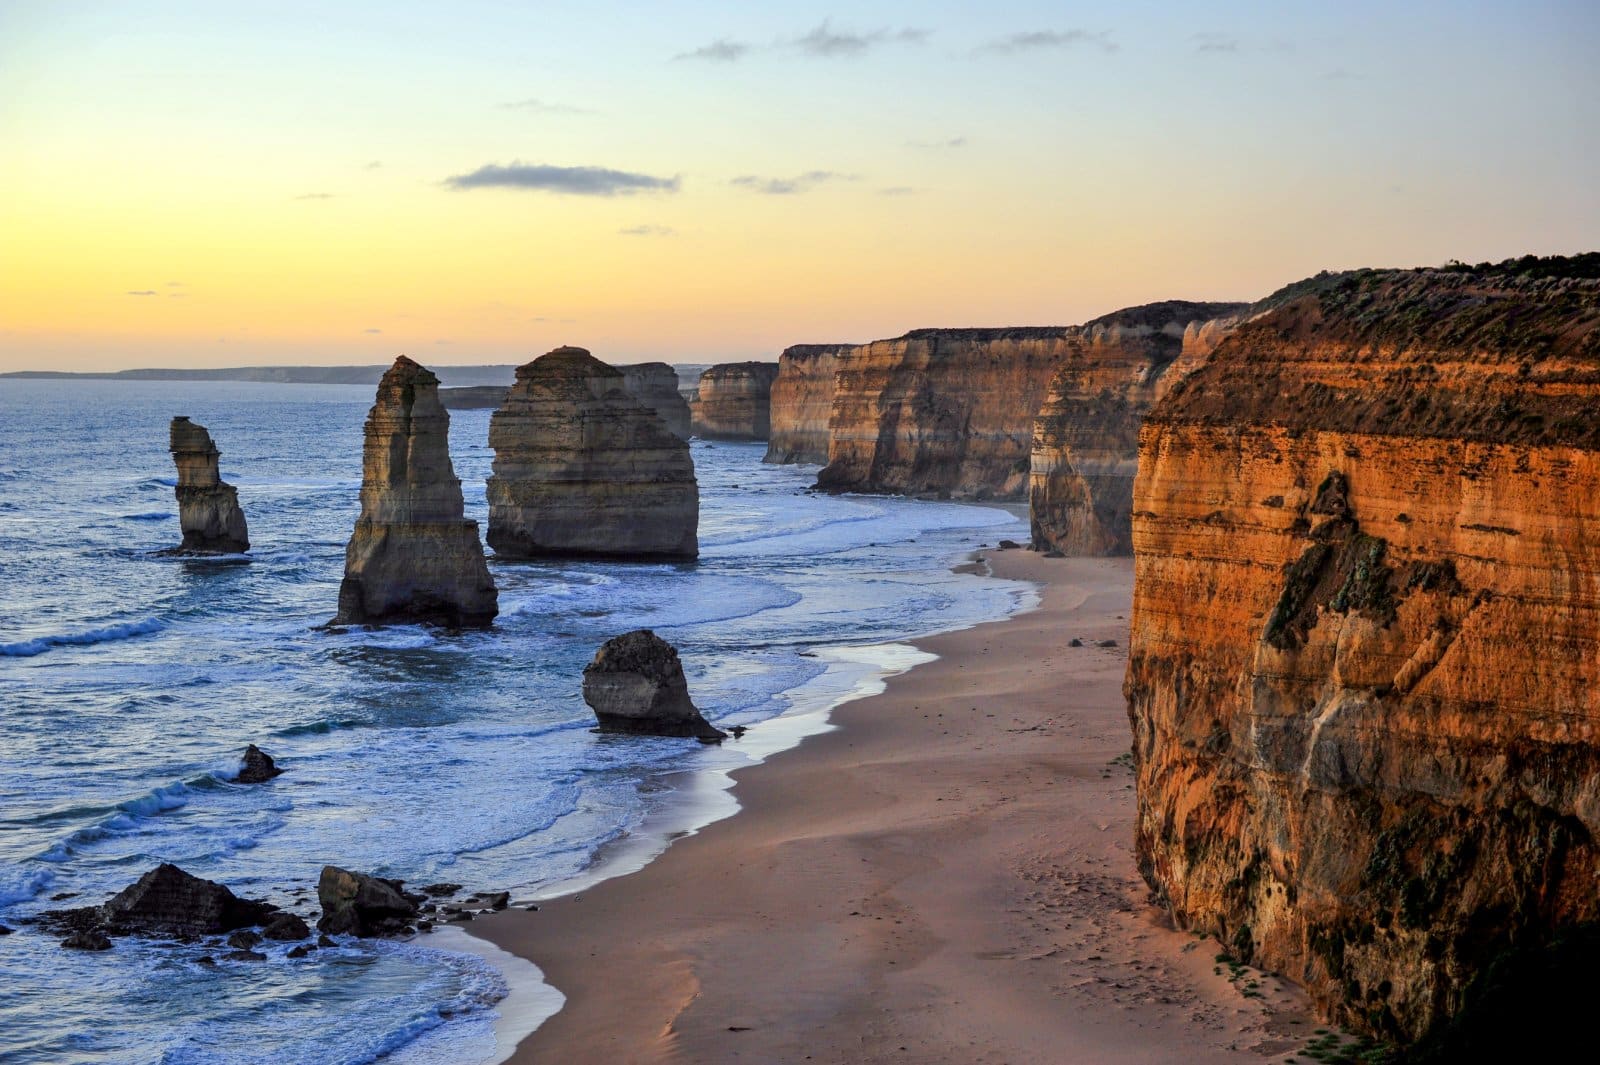 <p>Hike along Australia’s southeastern coast, enjoying spectacular ocean views and wildlife.</p>